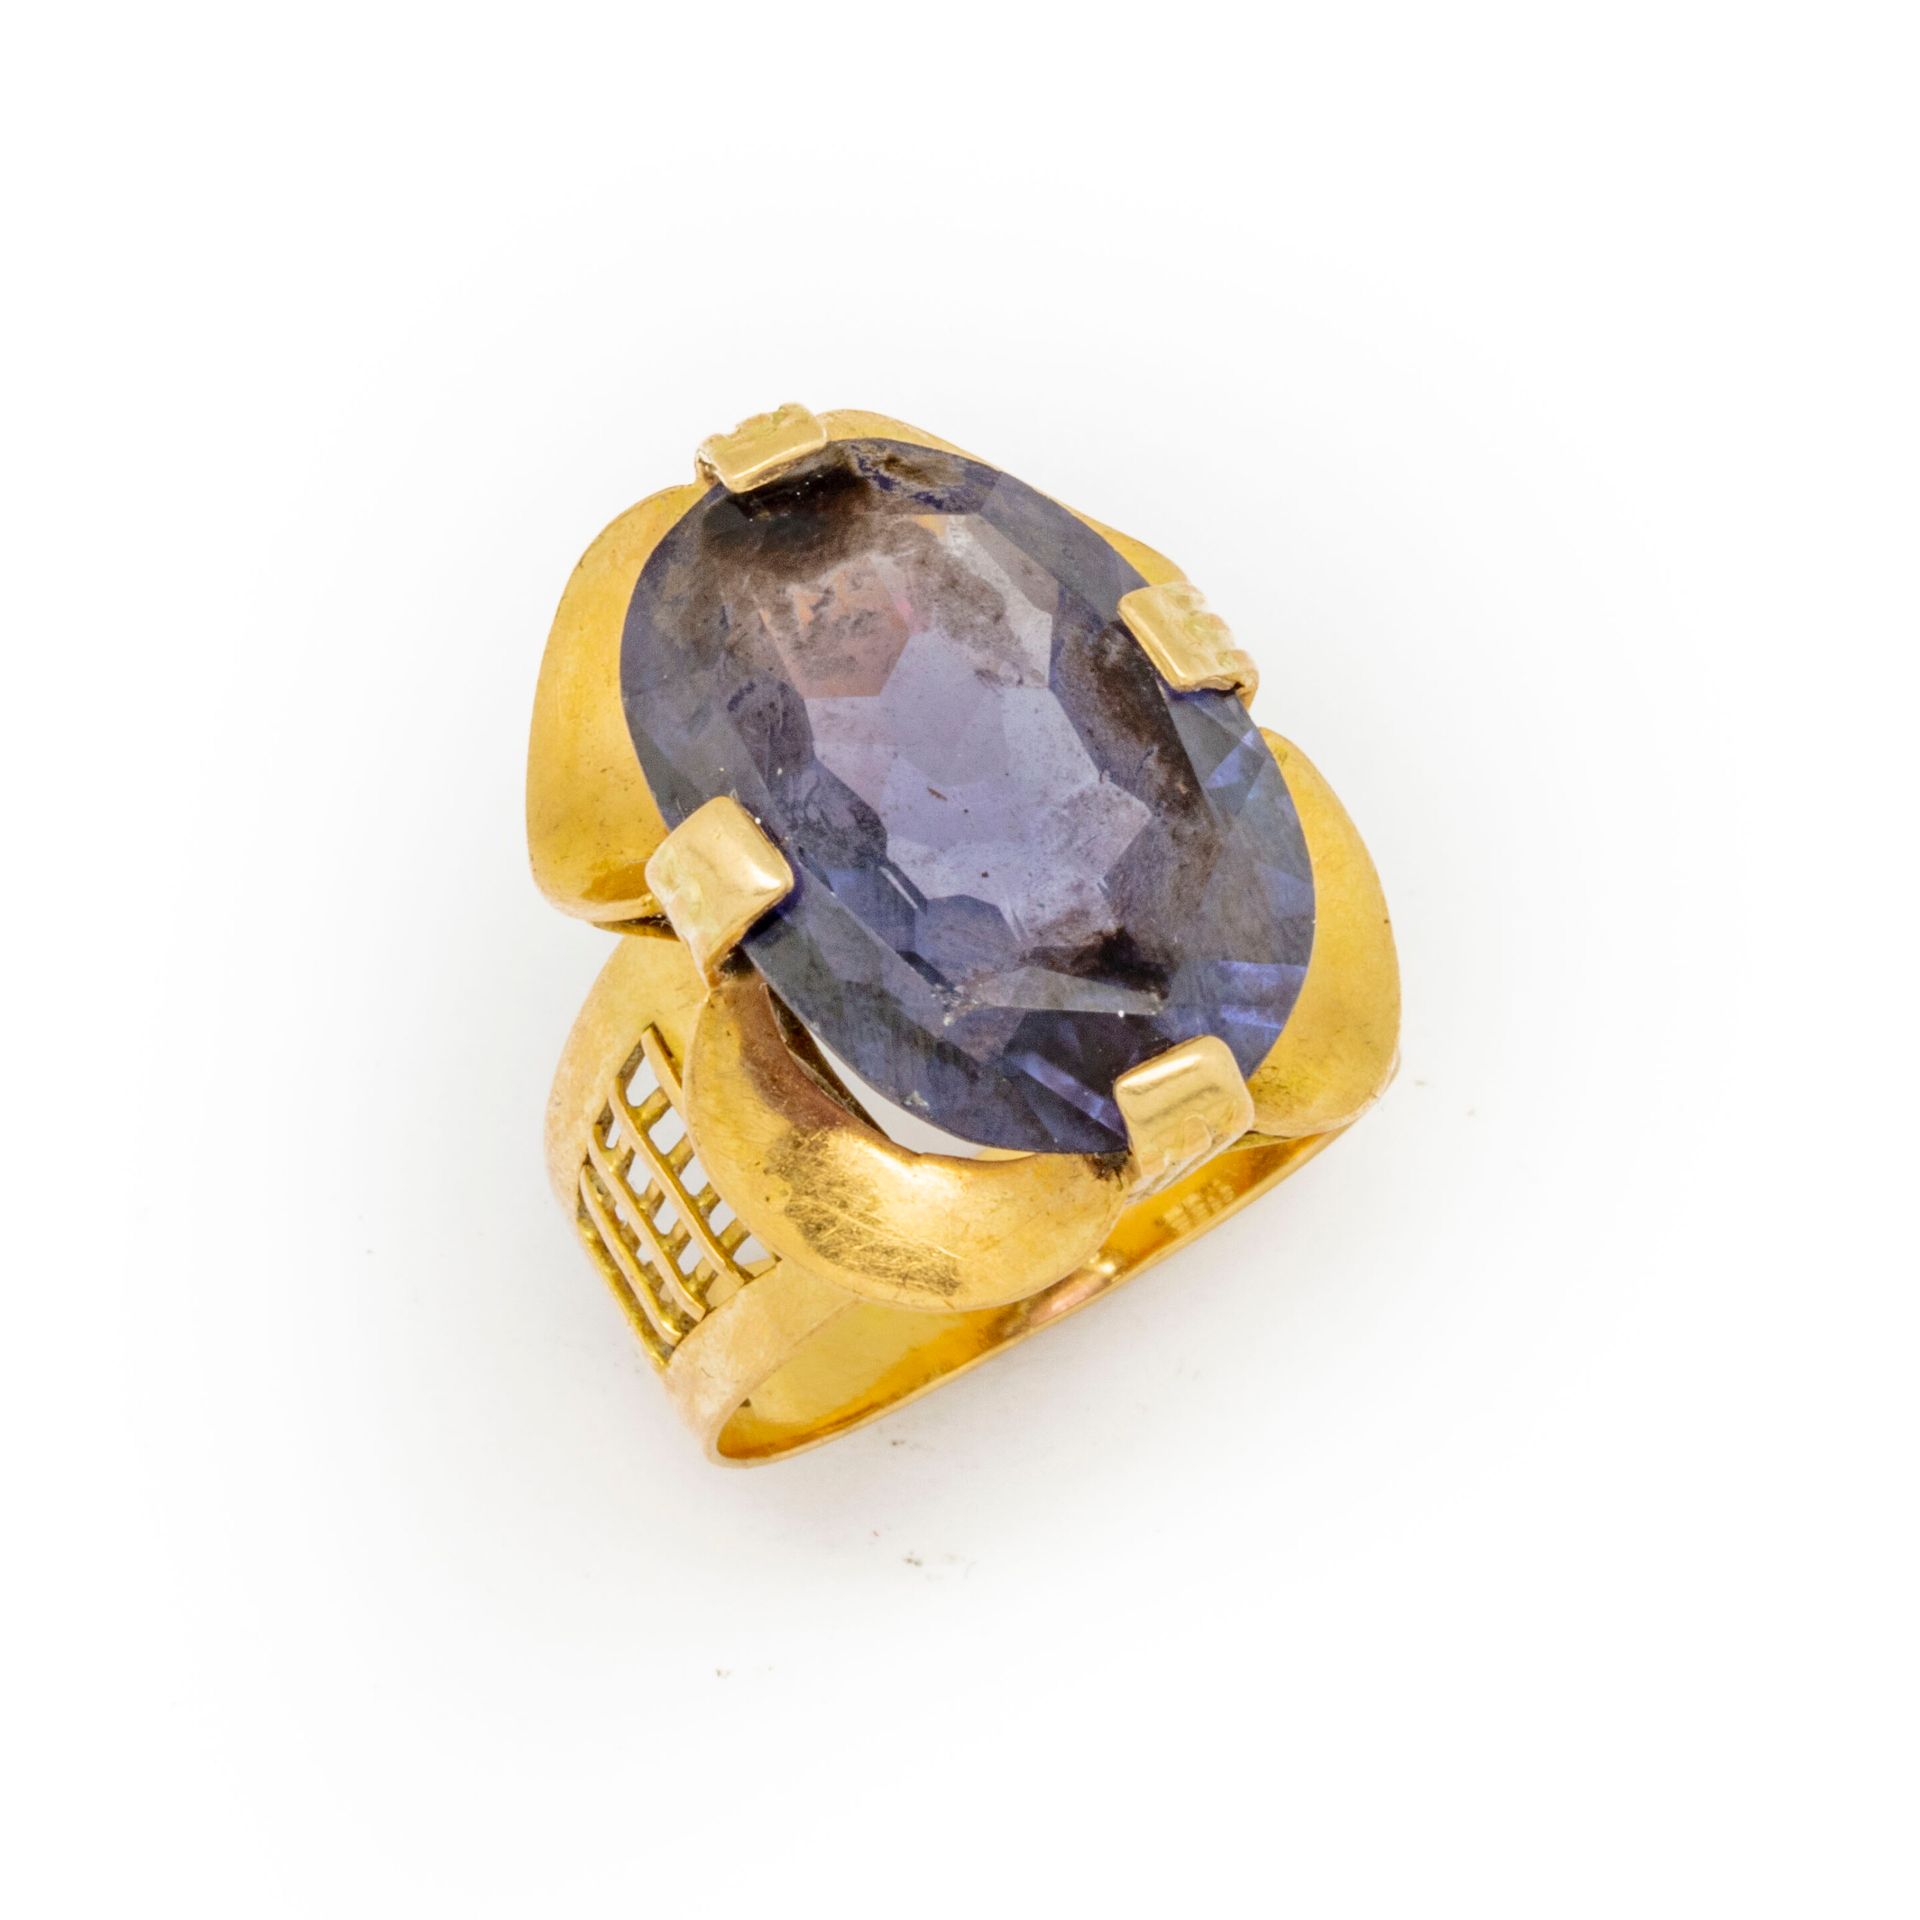 Null 镶嵌有椭圆形紫水晶的黄金戒指

毛重：11.32克。